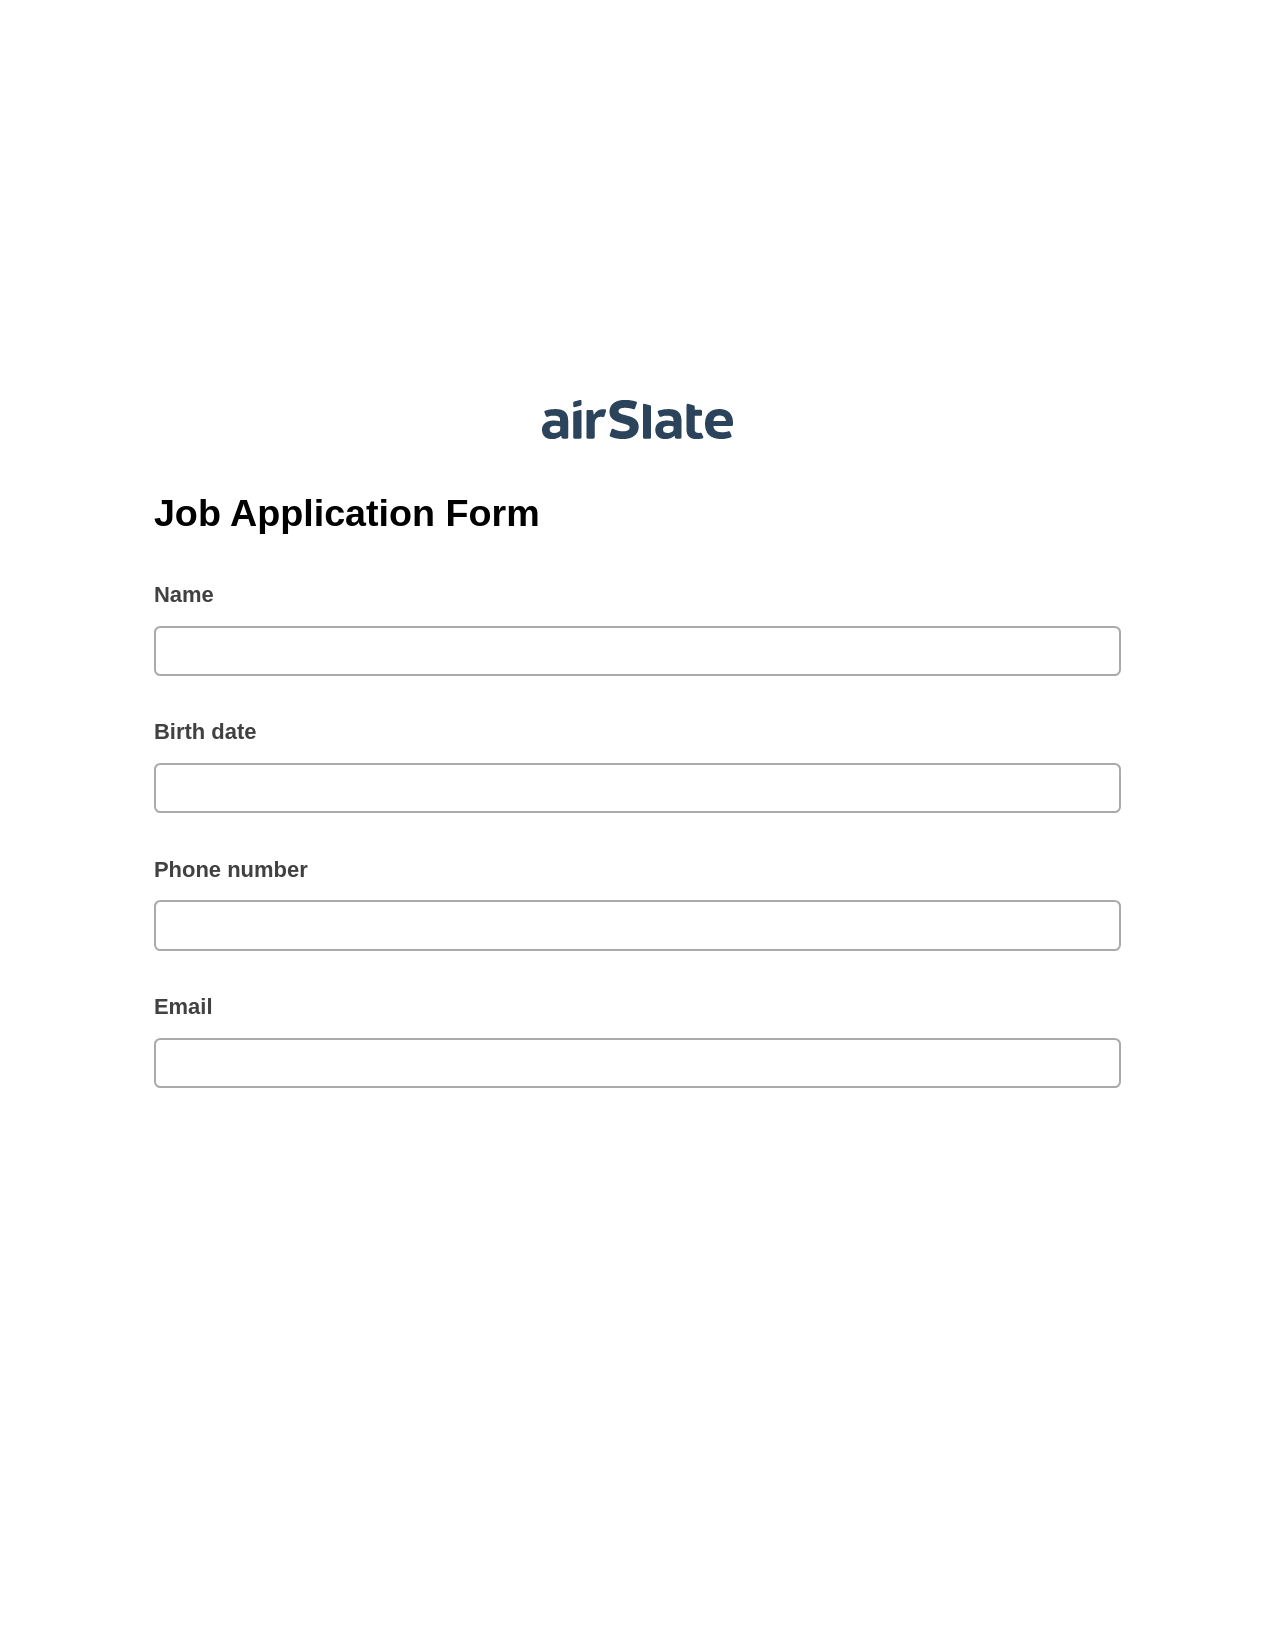 Multirole Job Application Form Pre-fill Slate from MS Dynamics 365 Records Bot, Mailchimp send Campaign bot, Dropbox Bot